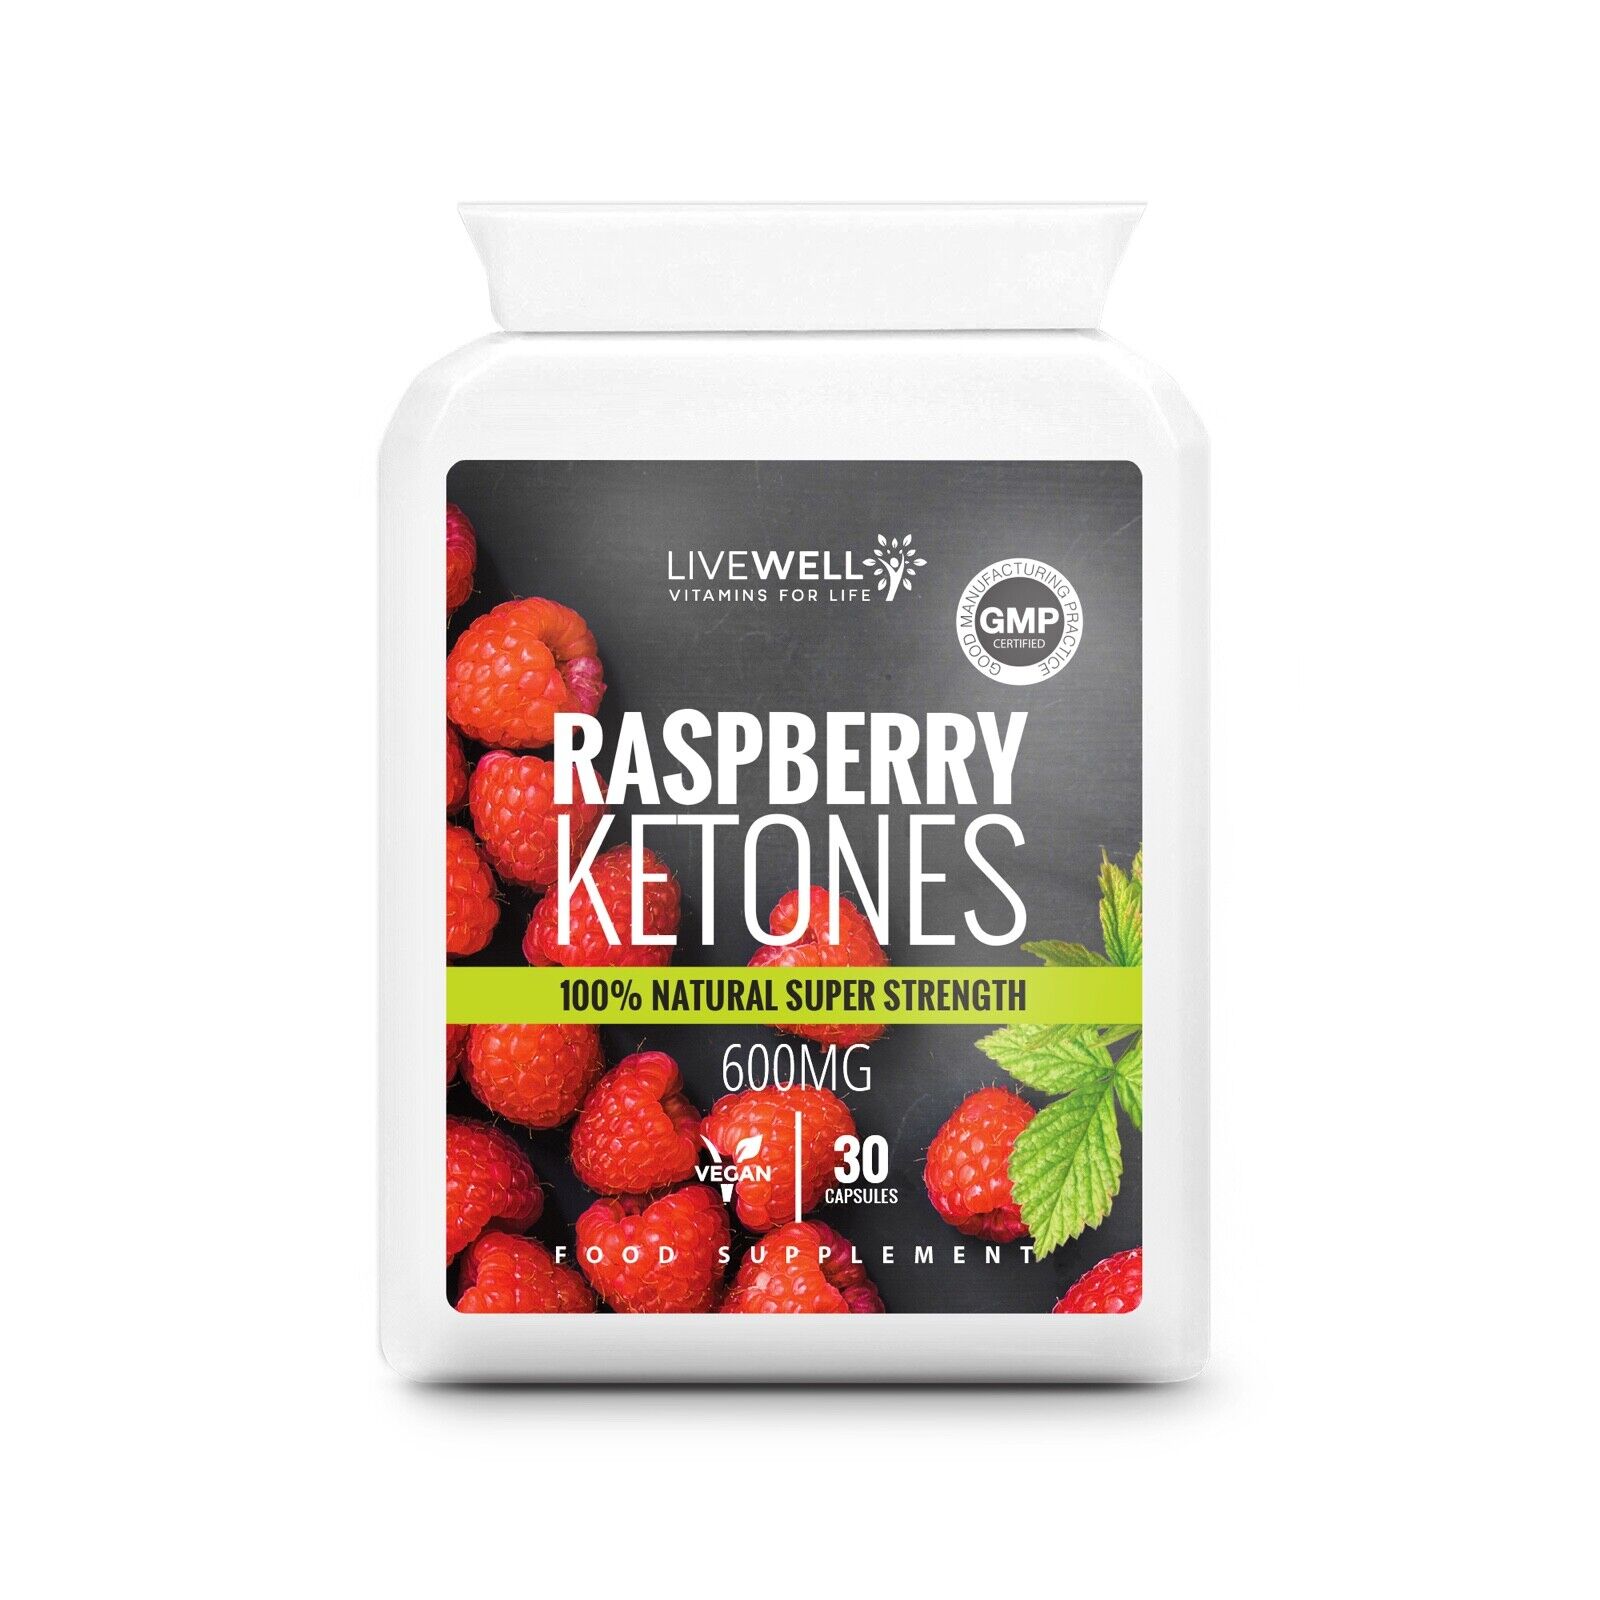 Raspberry Ketones Super Strength - Weight loss Fat Burn Keto Ketosis CAPSULES